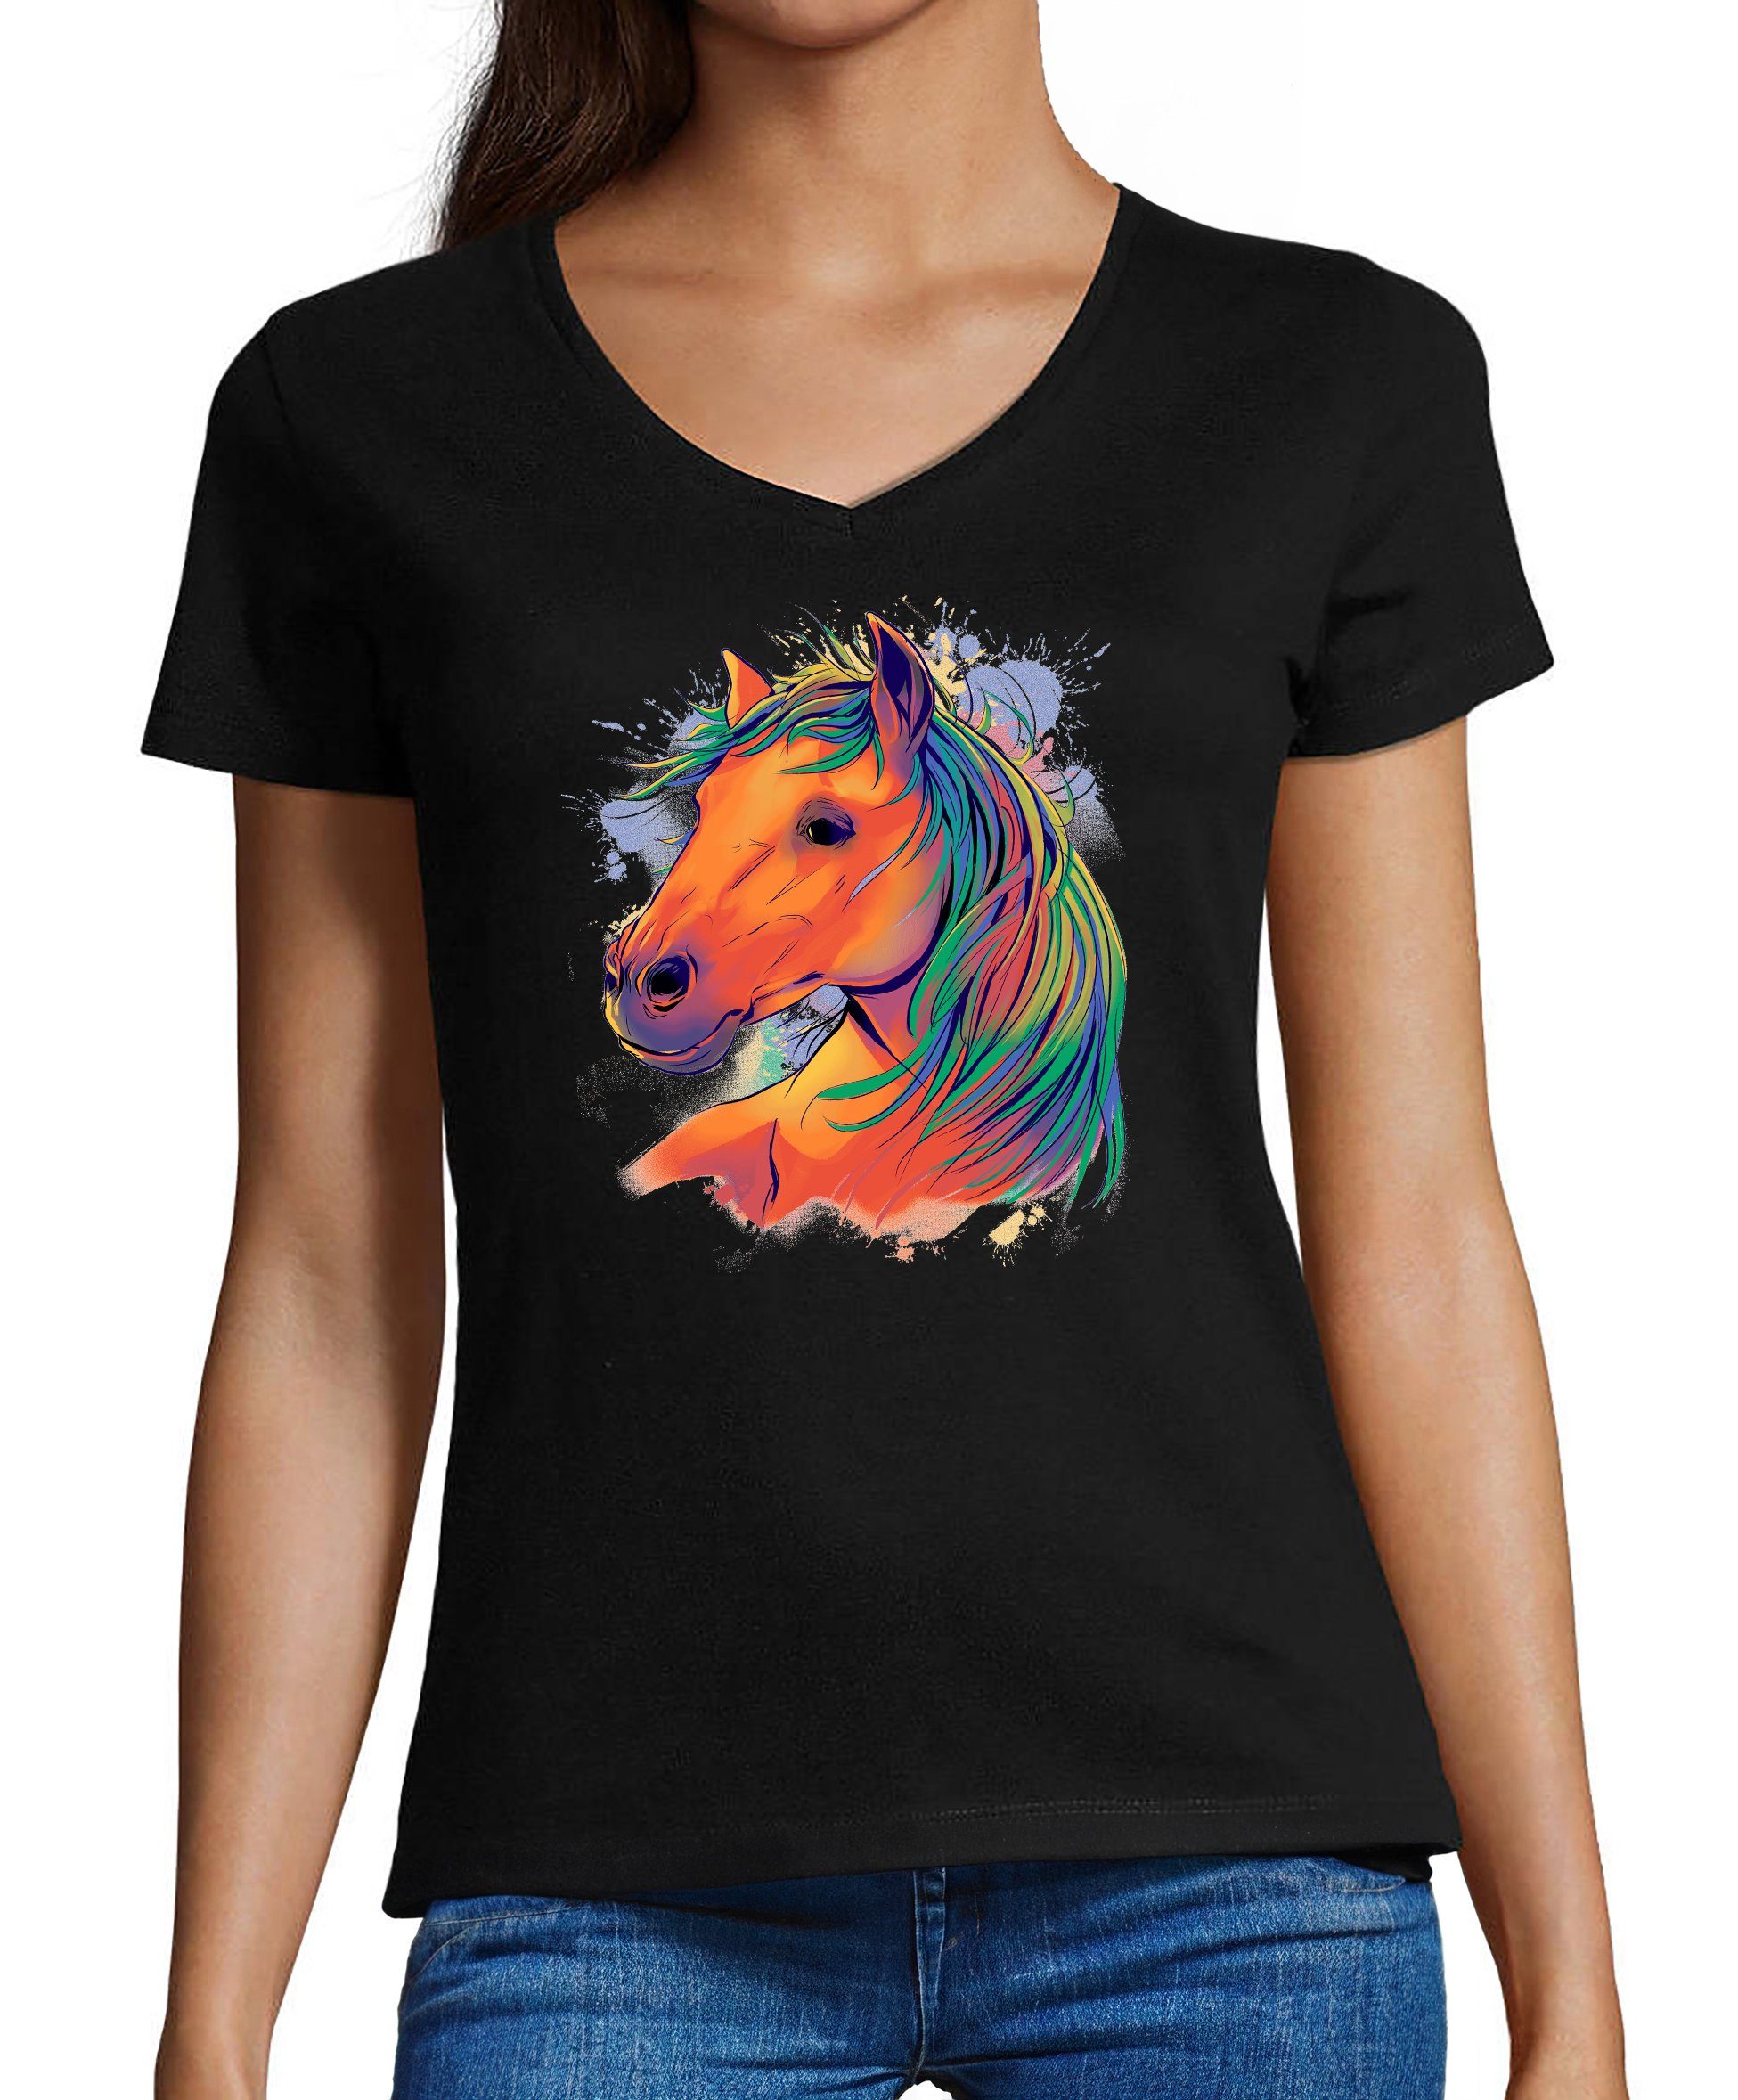 MyDesign24 T-Shirt Damen Pferde Print Shirt bedruckt - Pferdekopf in Ölfarben V-Ausschnitt Baumwollshirt mit Aufdruck, Slim Fit, i167